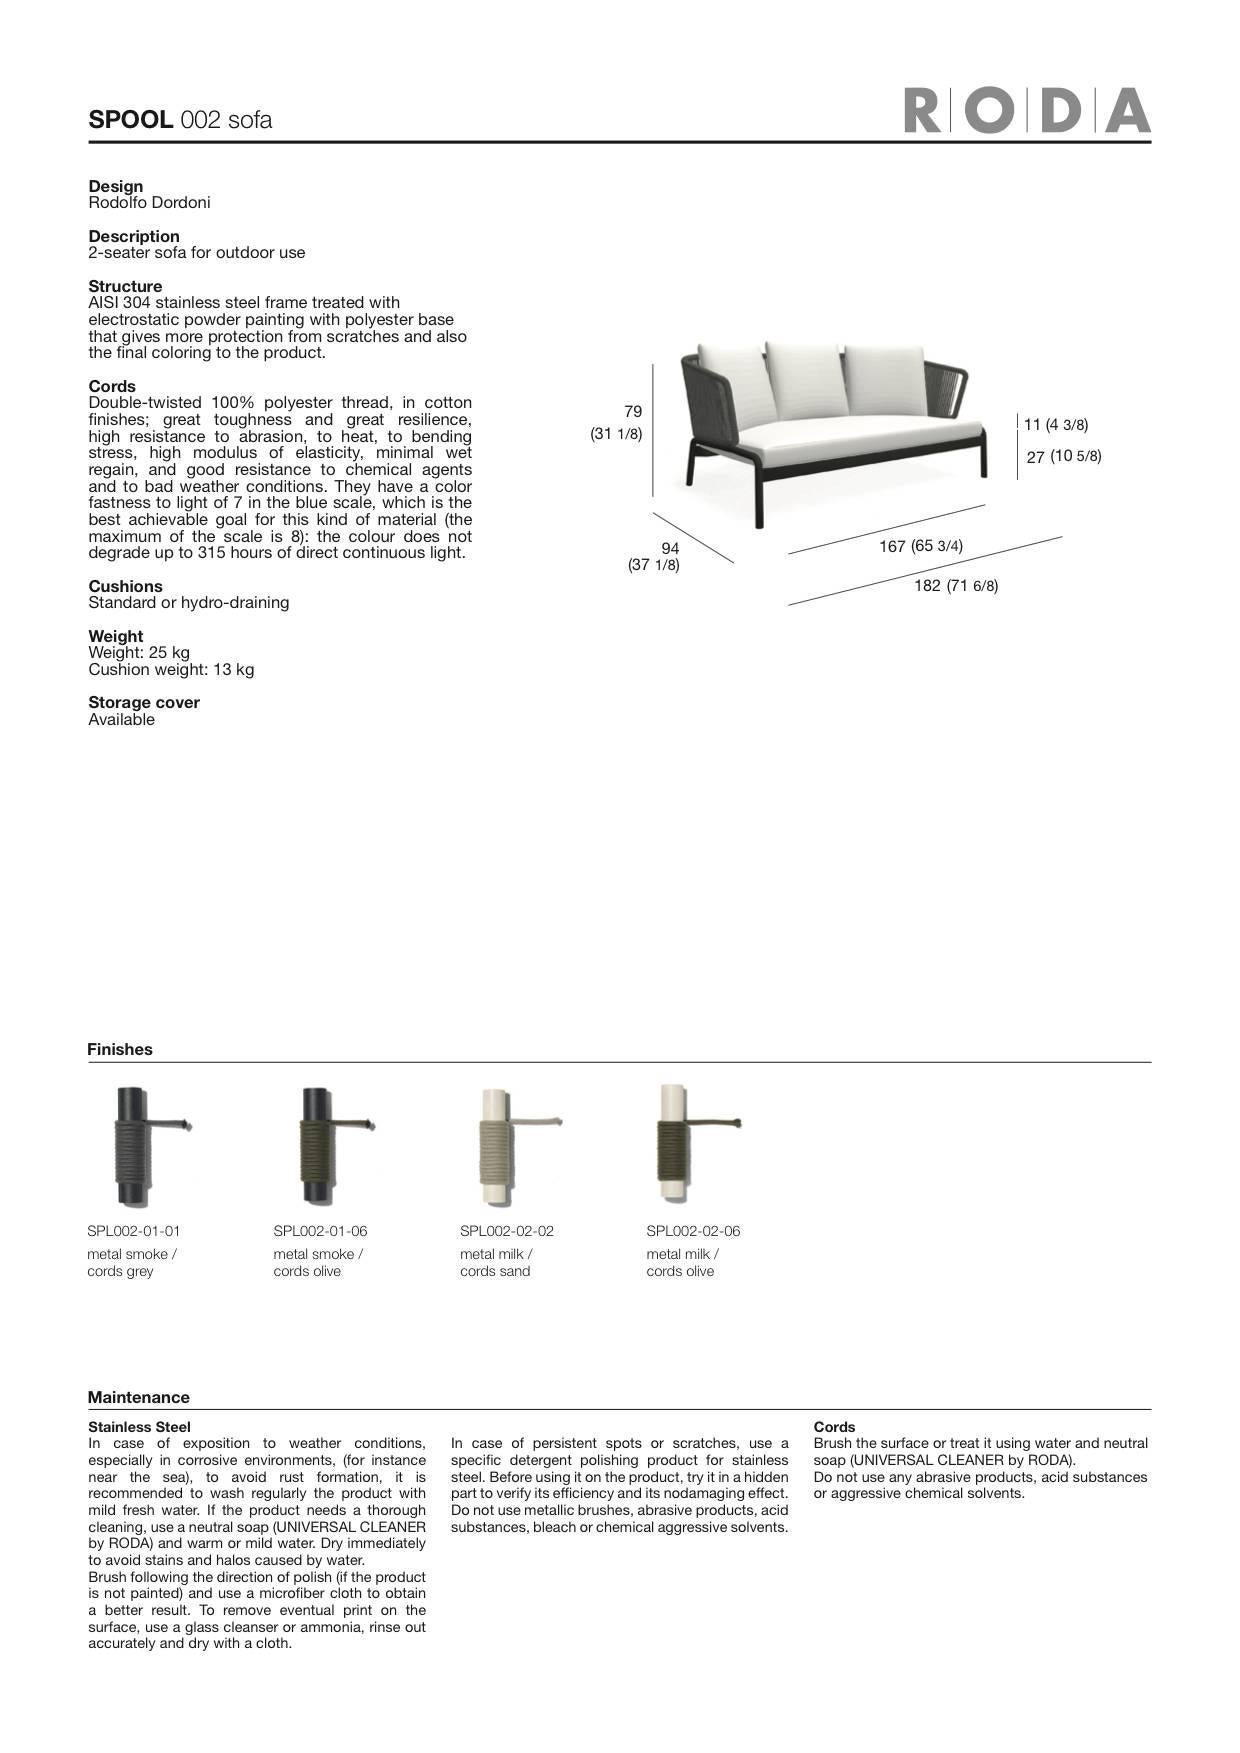 Roda Spool Two-Seat Sofa for Outdoor/Indoor Use by Rodolfo Dordoni im Zustand „Neu“ im Angebot in Rhinebeck, NY